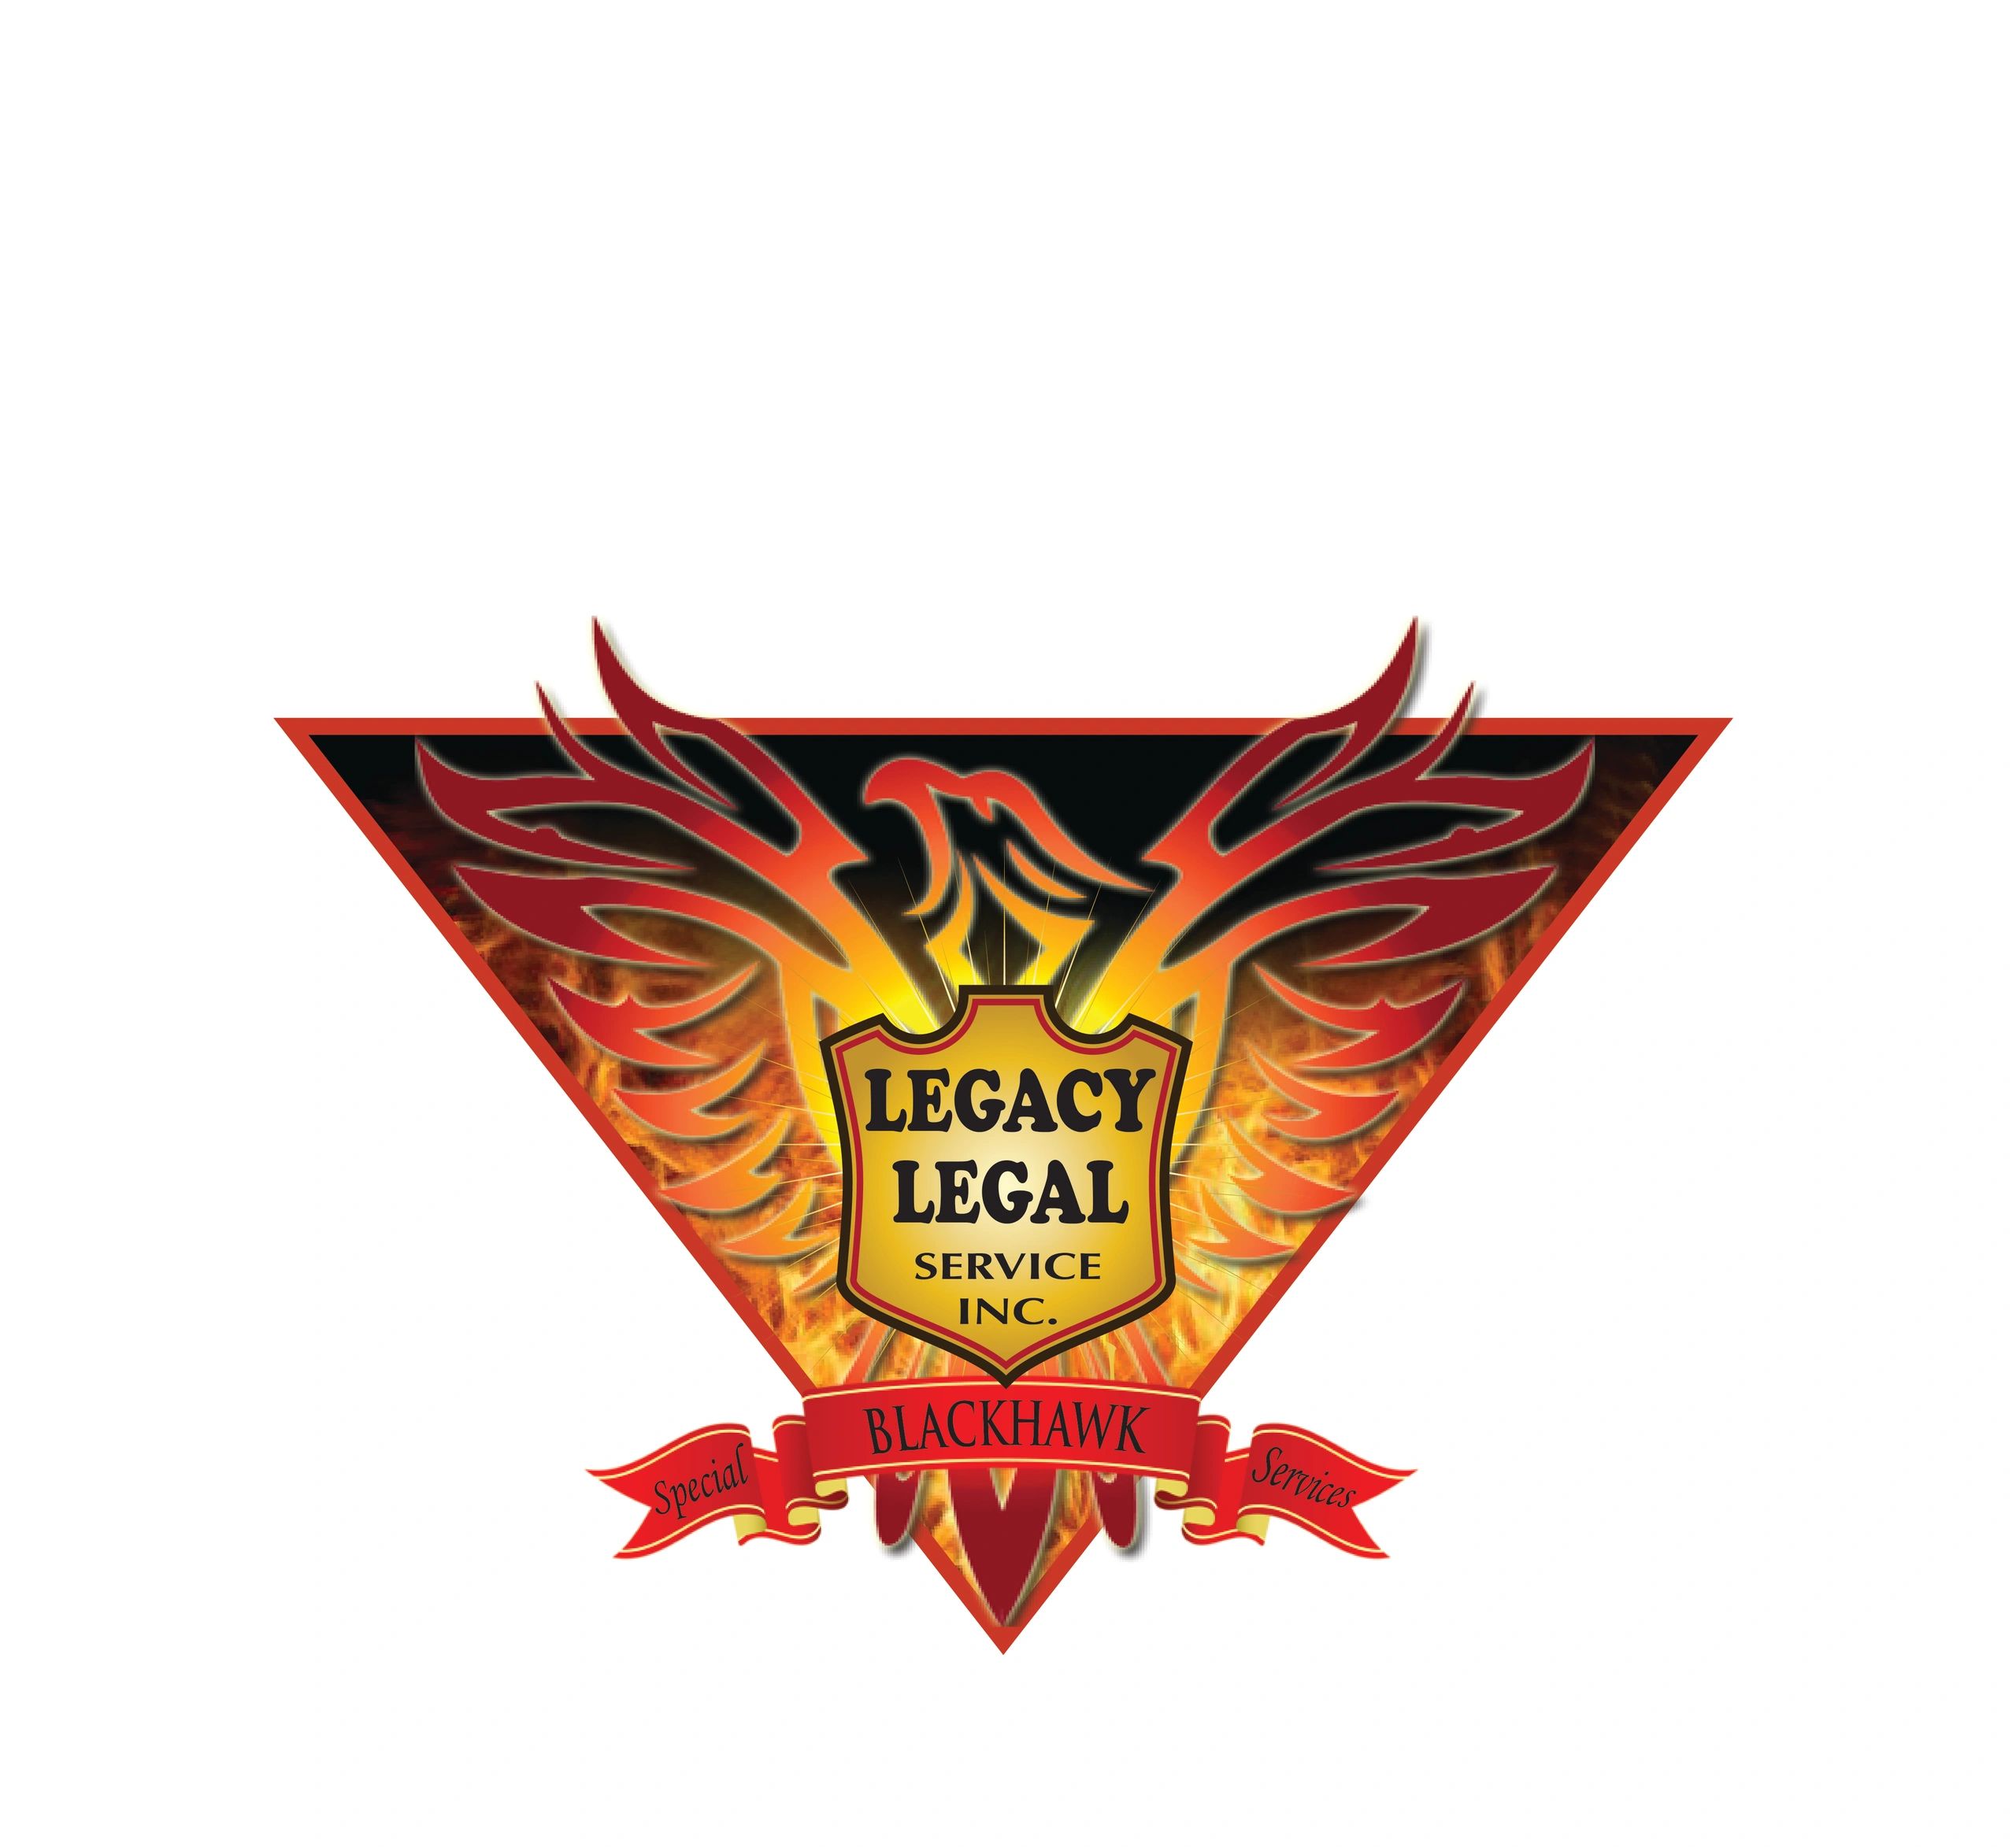 Blackhawk Legal Service